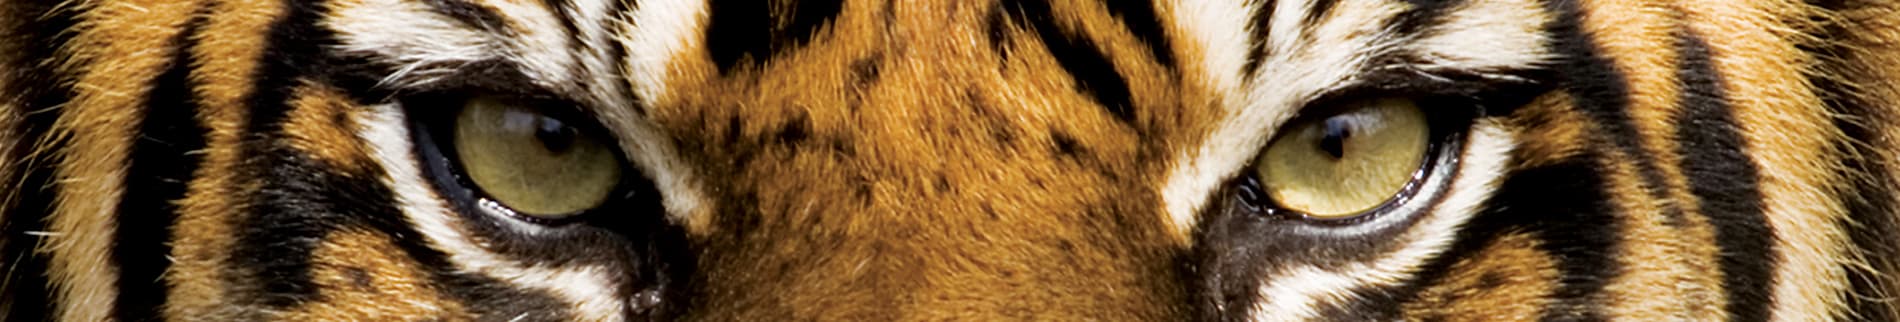 Tiger eyes closeup